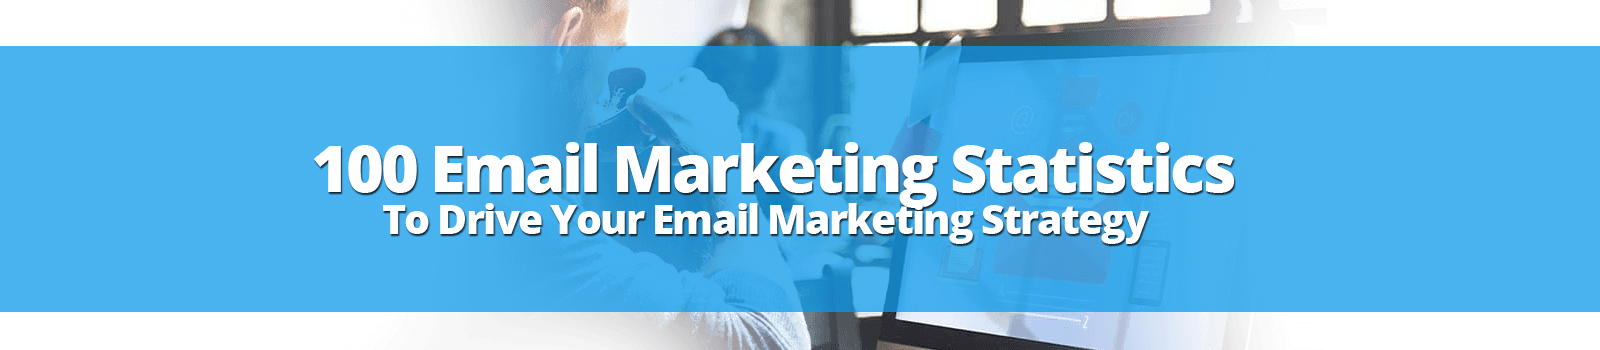 100 Email Marketing Statistics